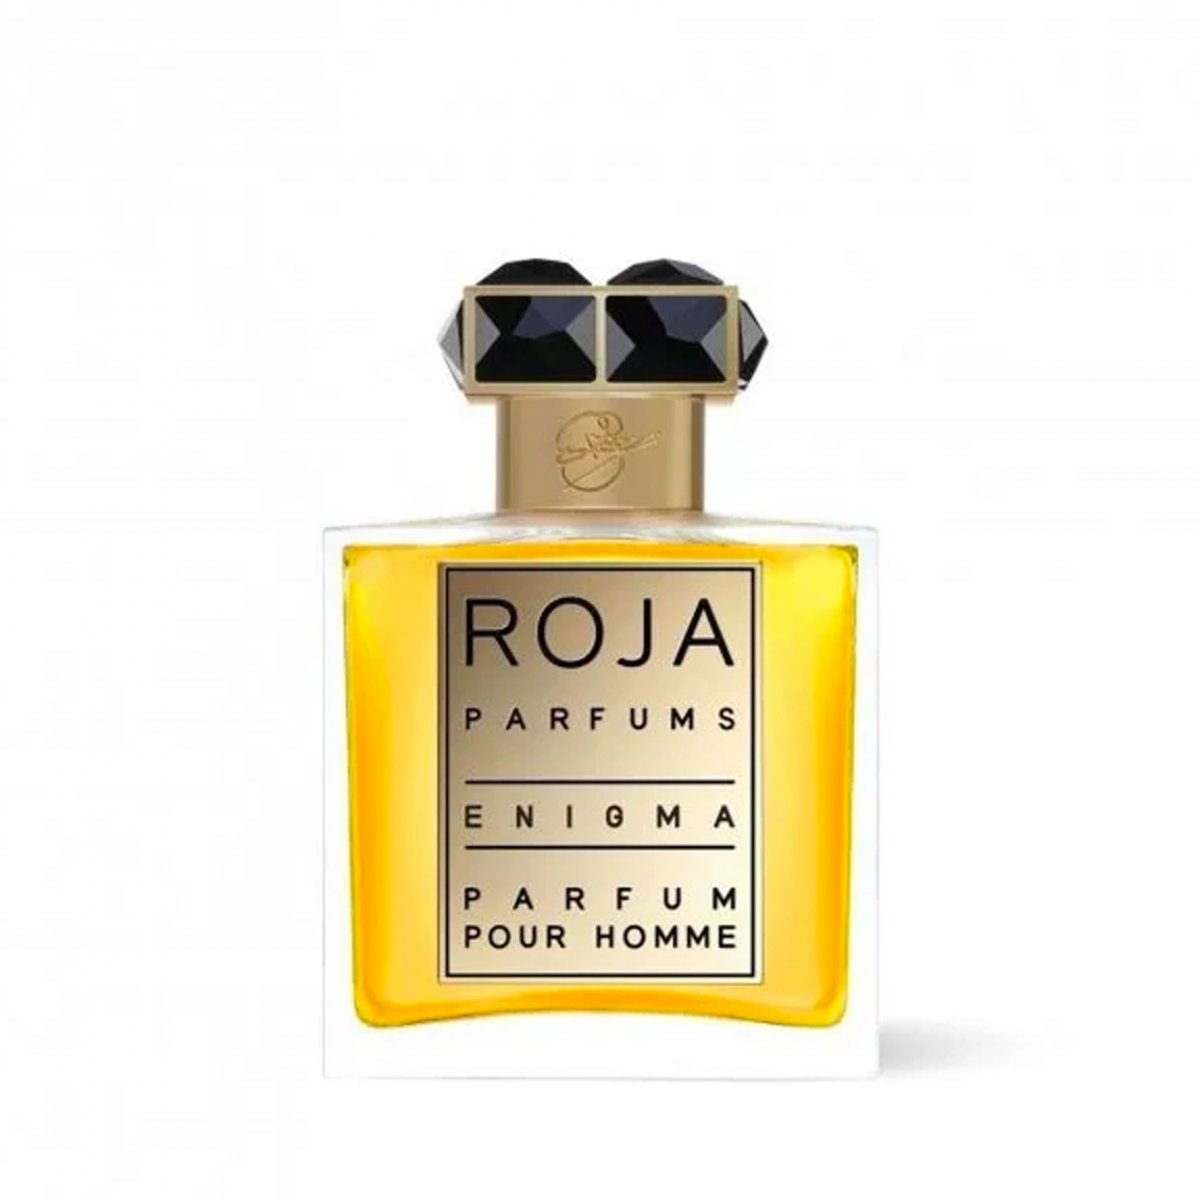 Roja Parfums Enigma Pour Homme Parfum (50 ml) von Roja Parfums